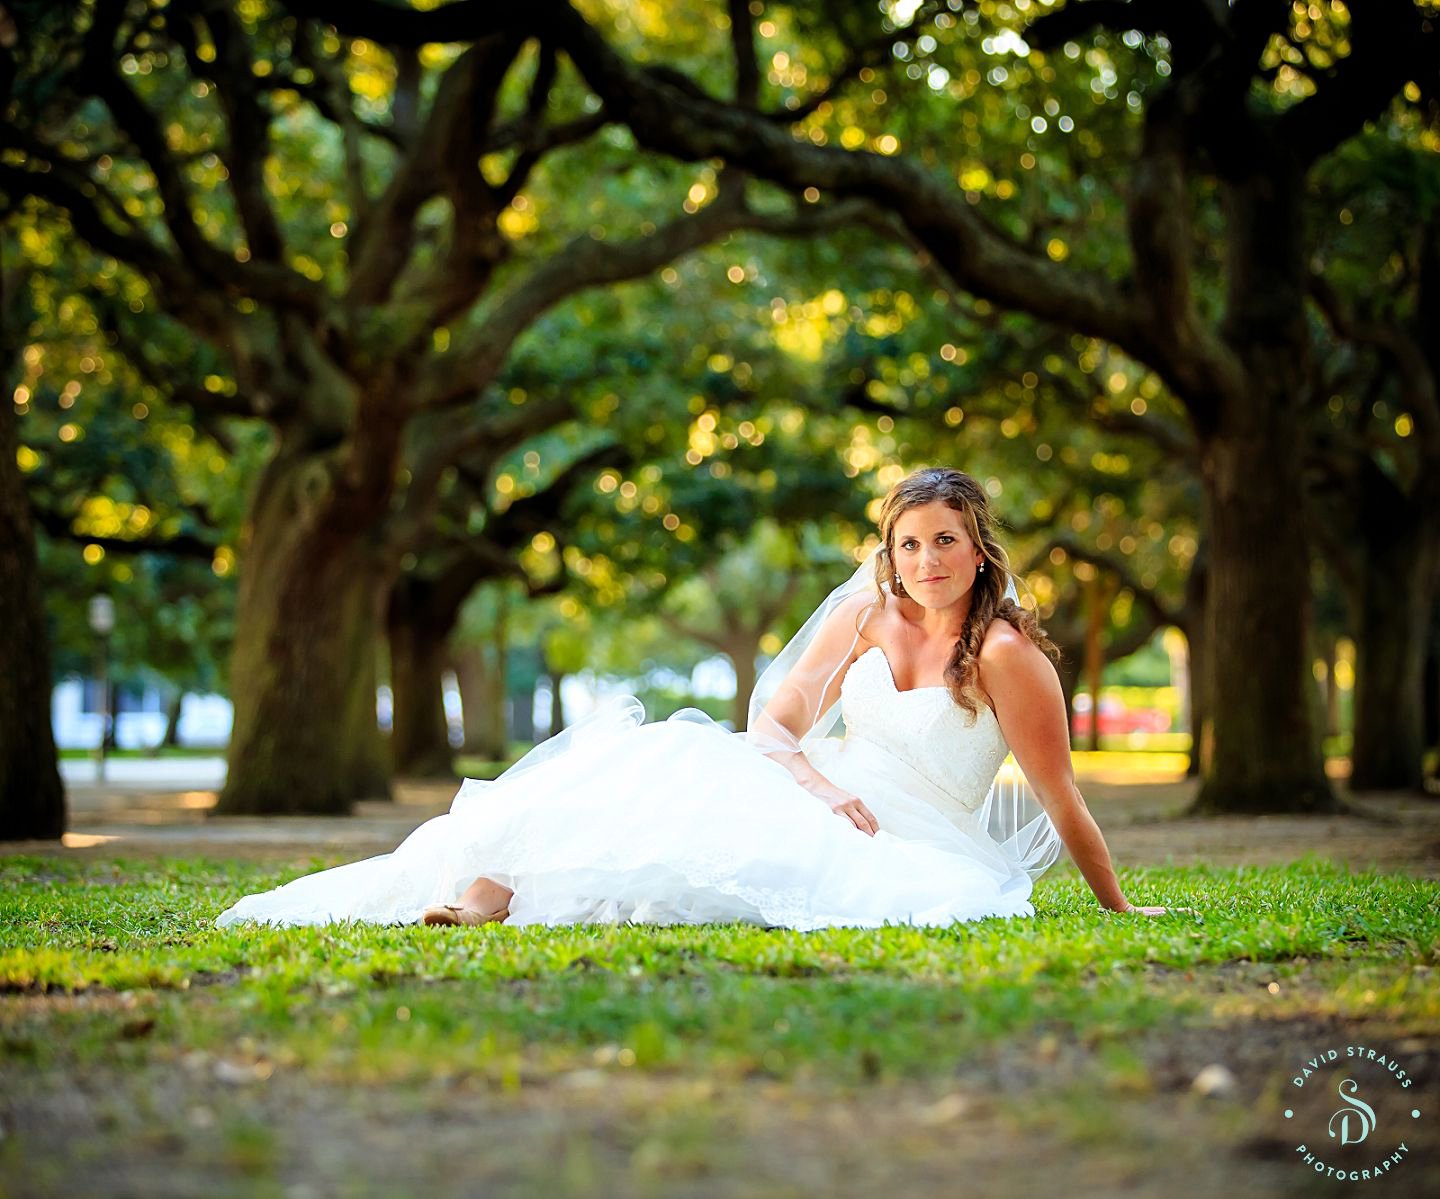 Charleston wedding photographer - Holly - David Strauss Photography